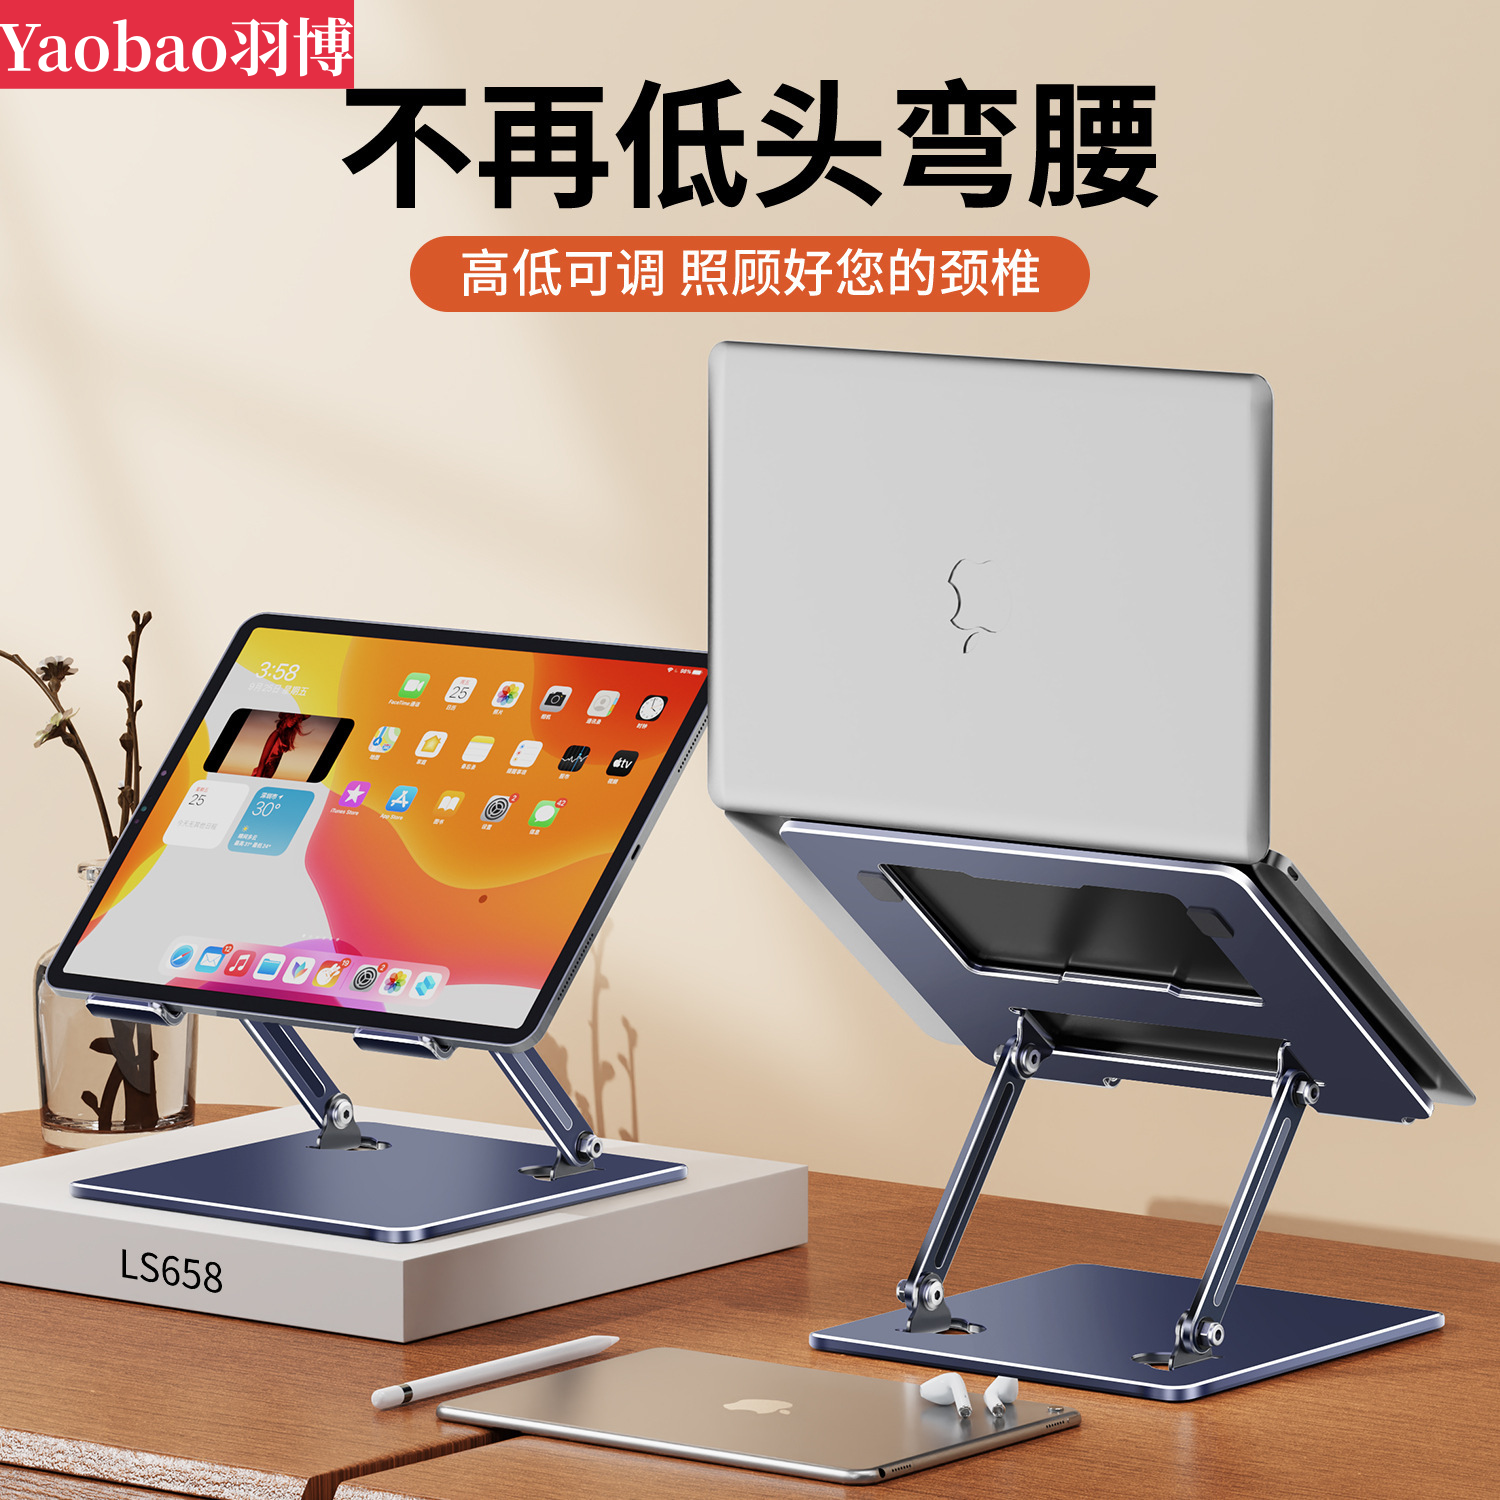 Yoobao 羽博 金属笔记本支架电脑支架钢金升降便携式增高架底座折叠散热架